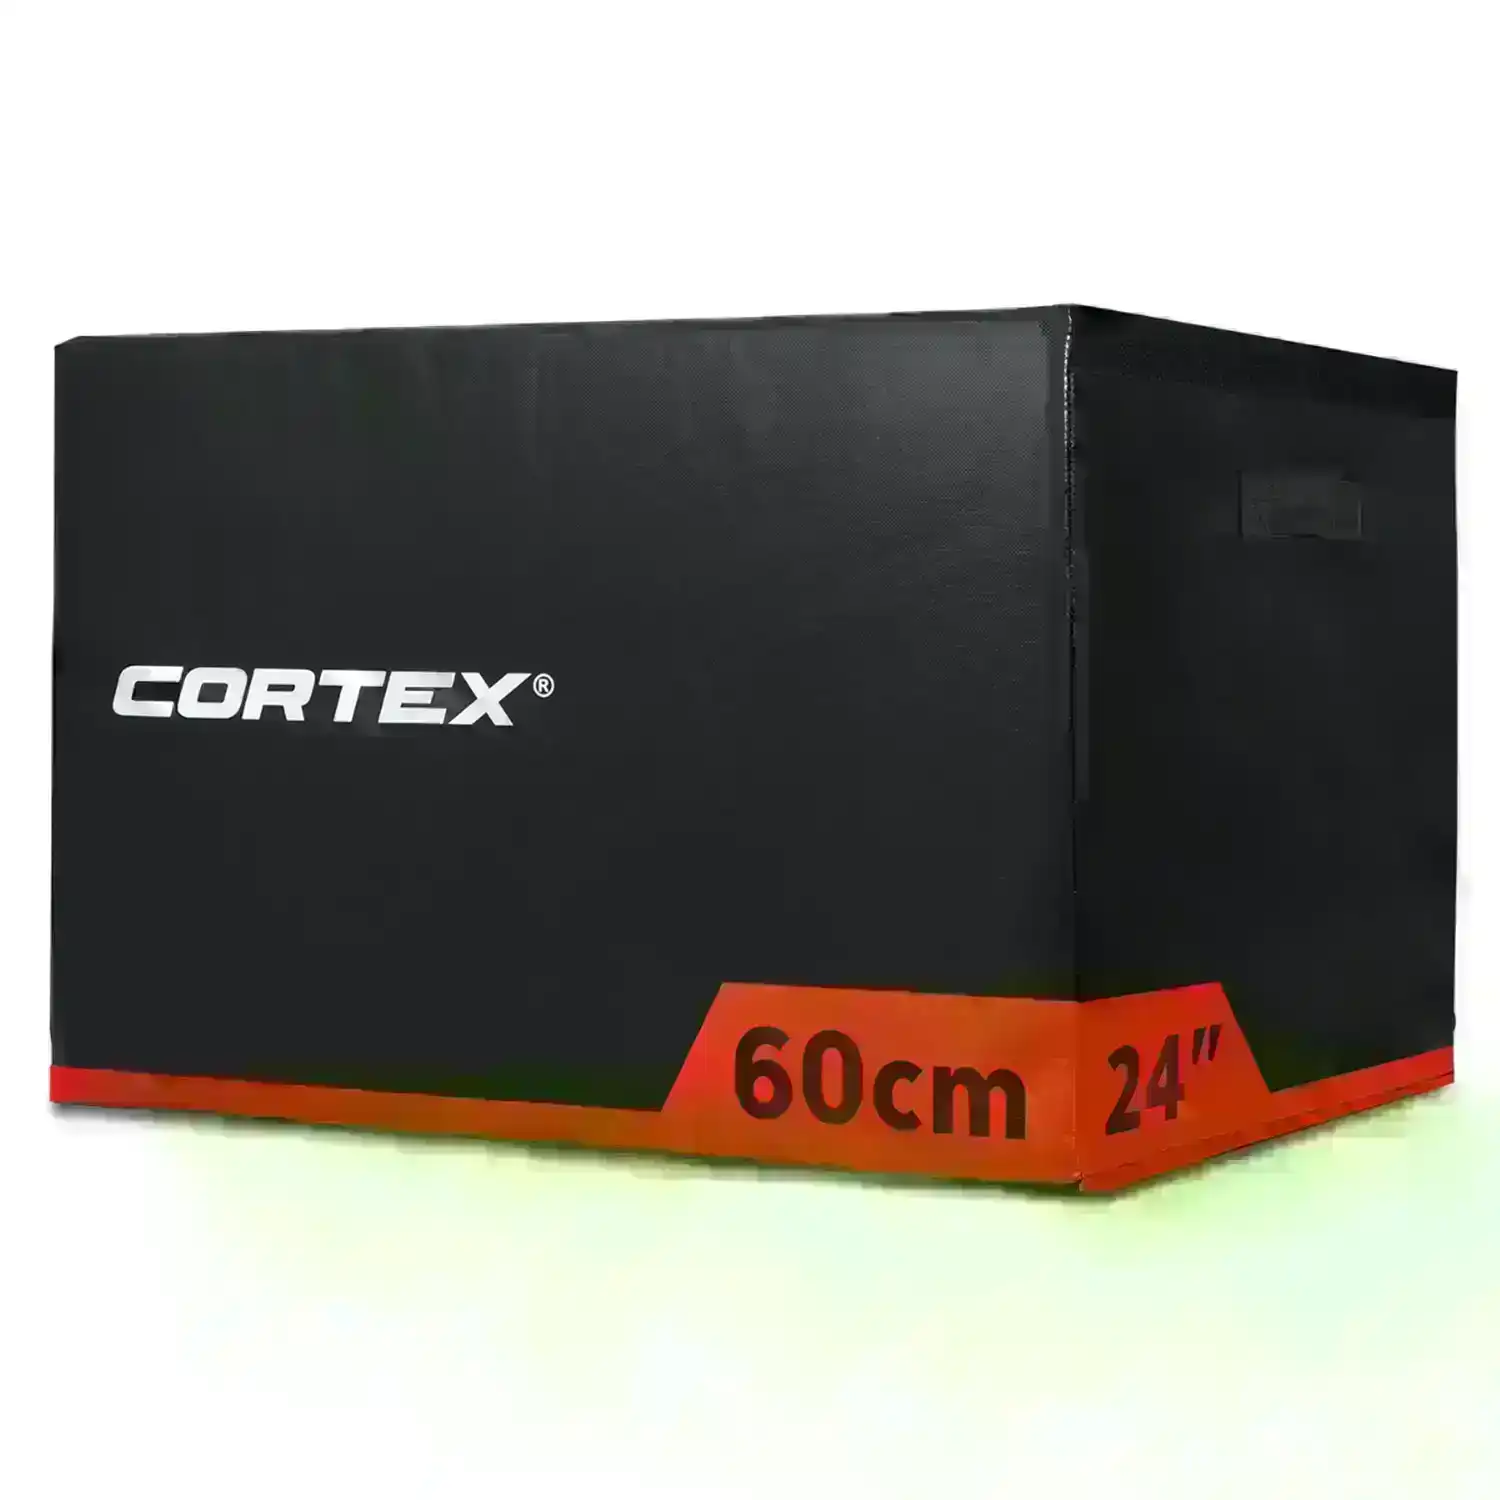 Cortex Soft Plyo Box 60cm